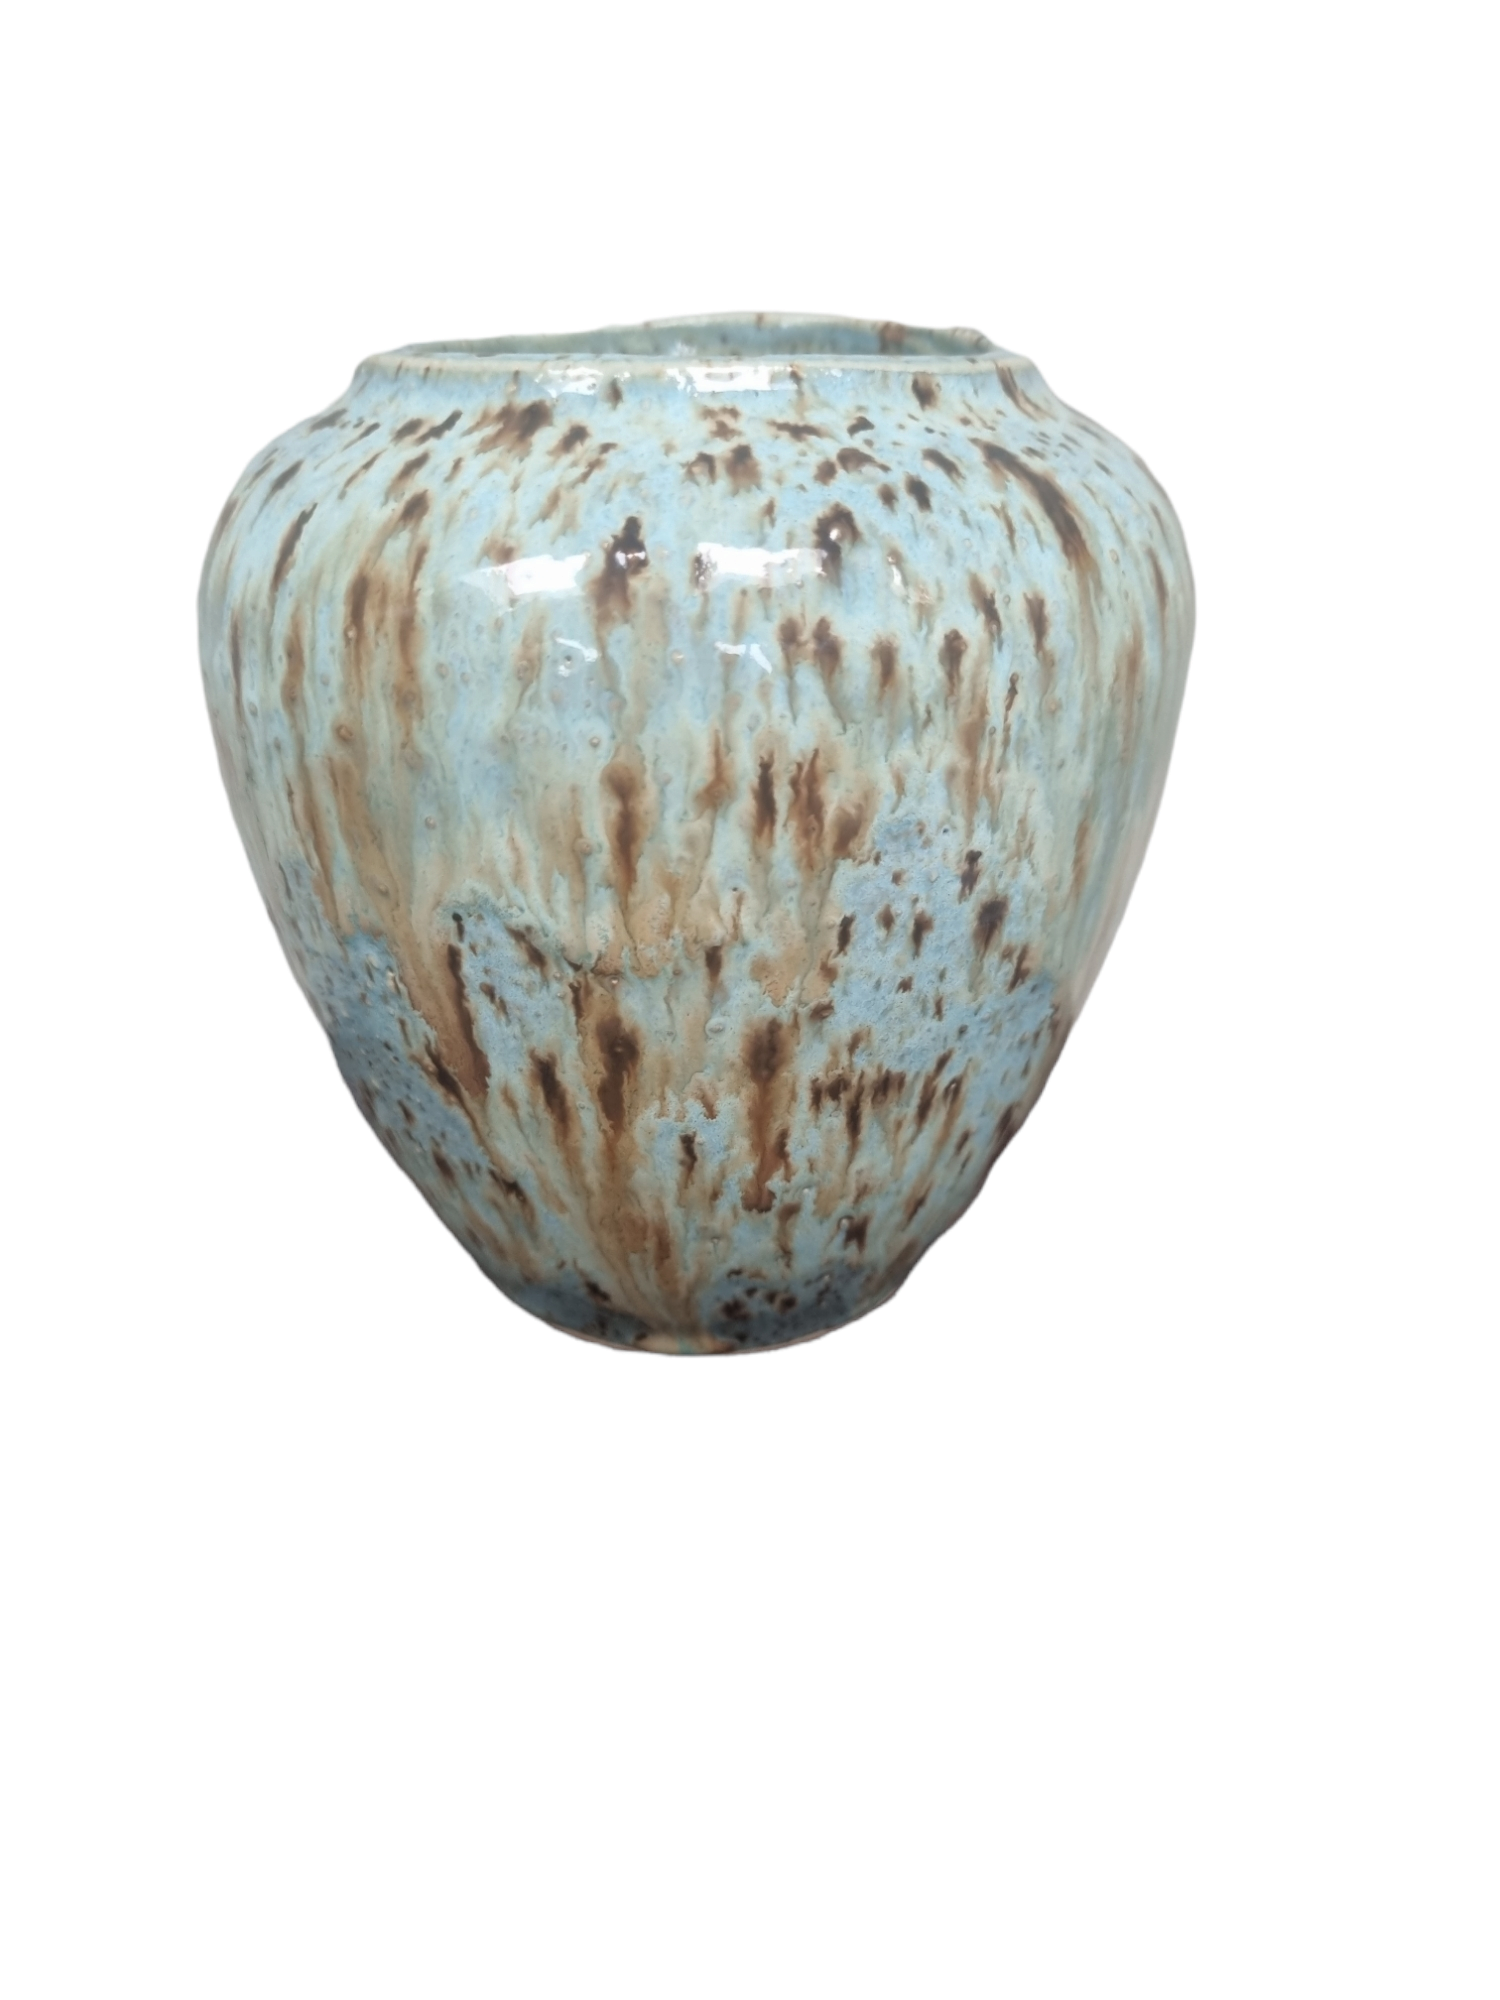 Lille Tulipanvase med Lyseblå glasur og krystaleffekt